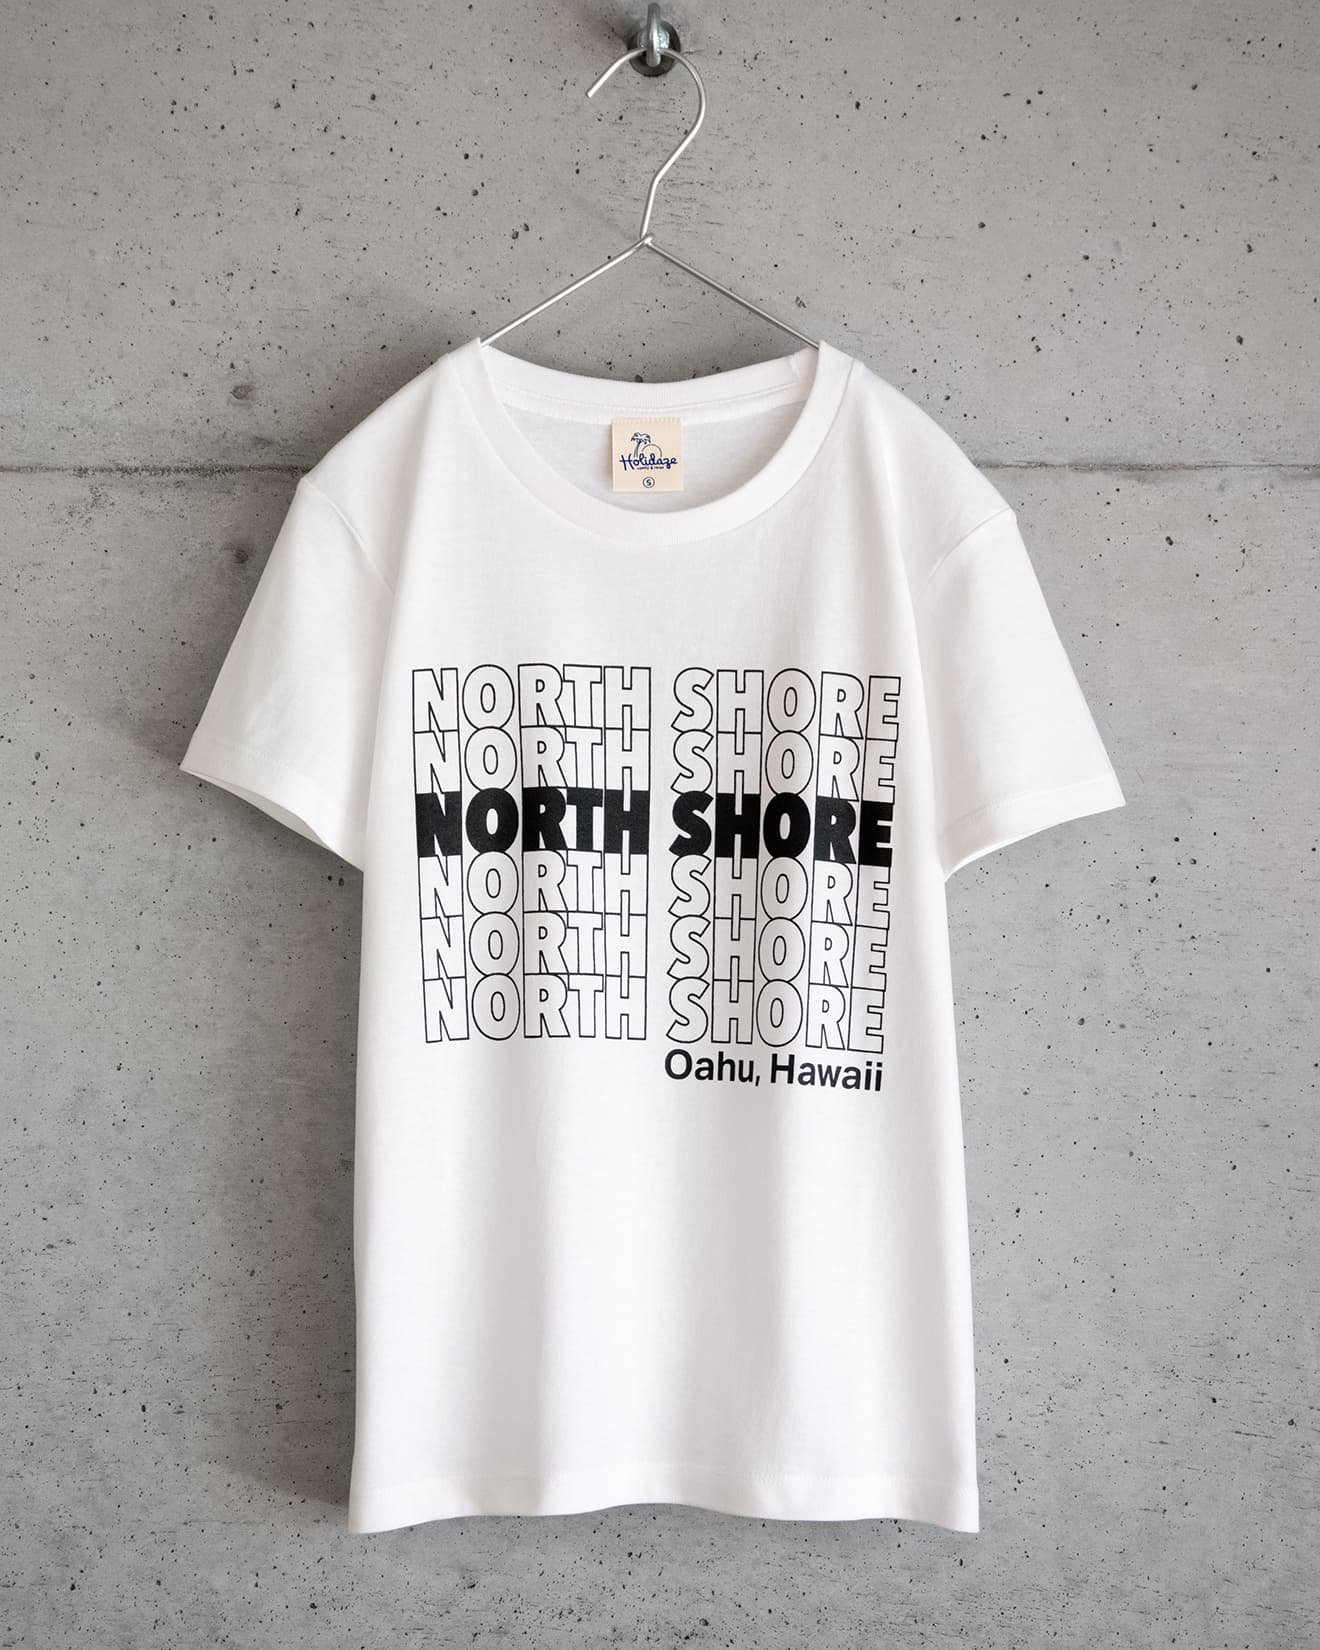 North Shore Under Ground Tシャツ ノースショア ハワイMadeinHawaii製です